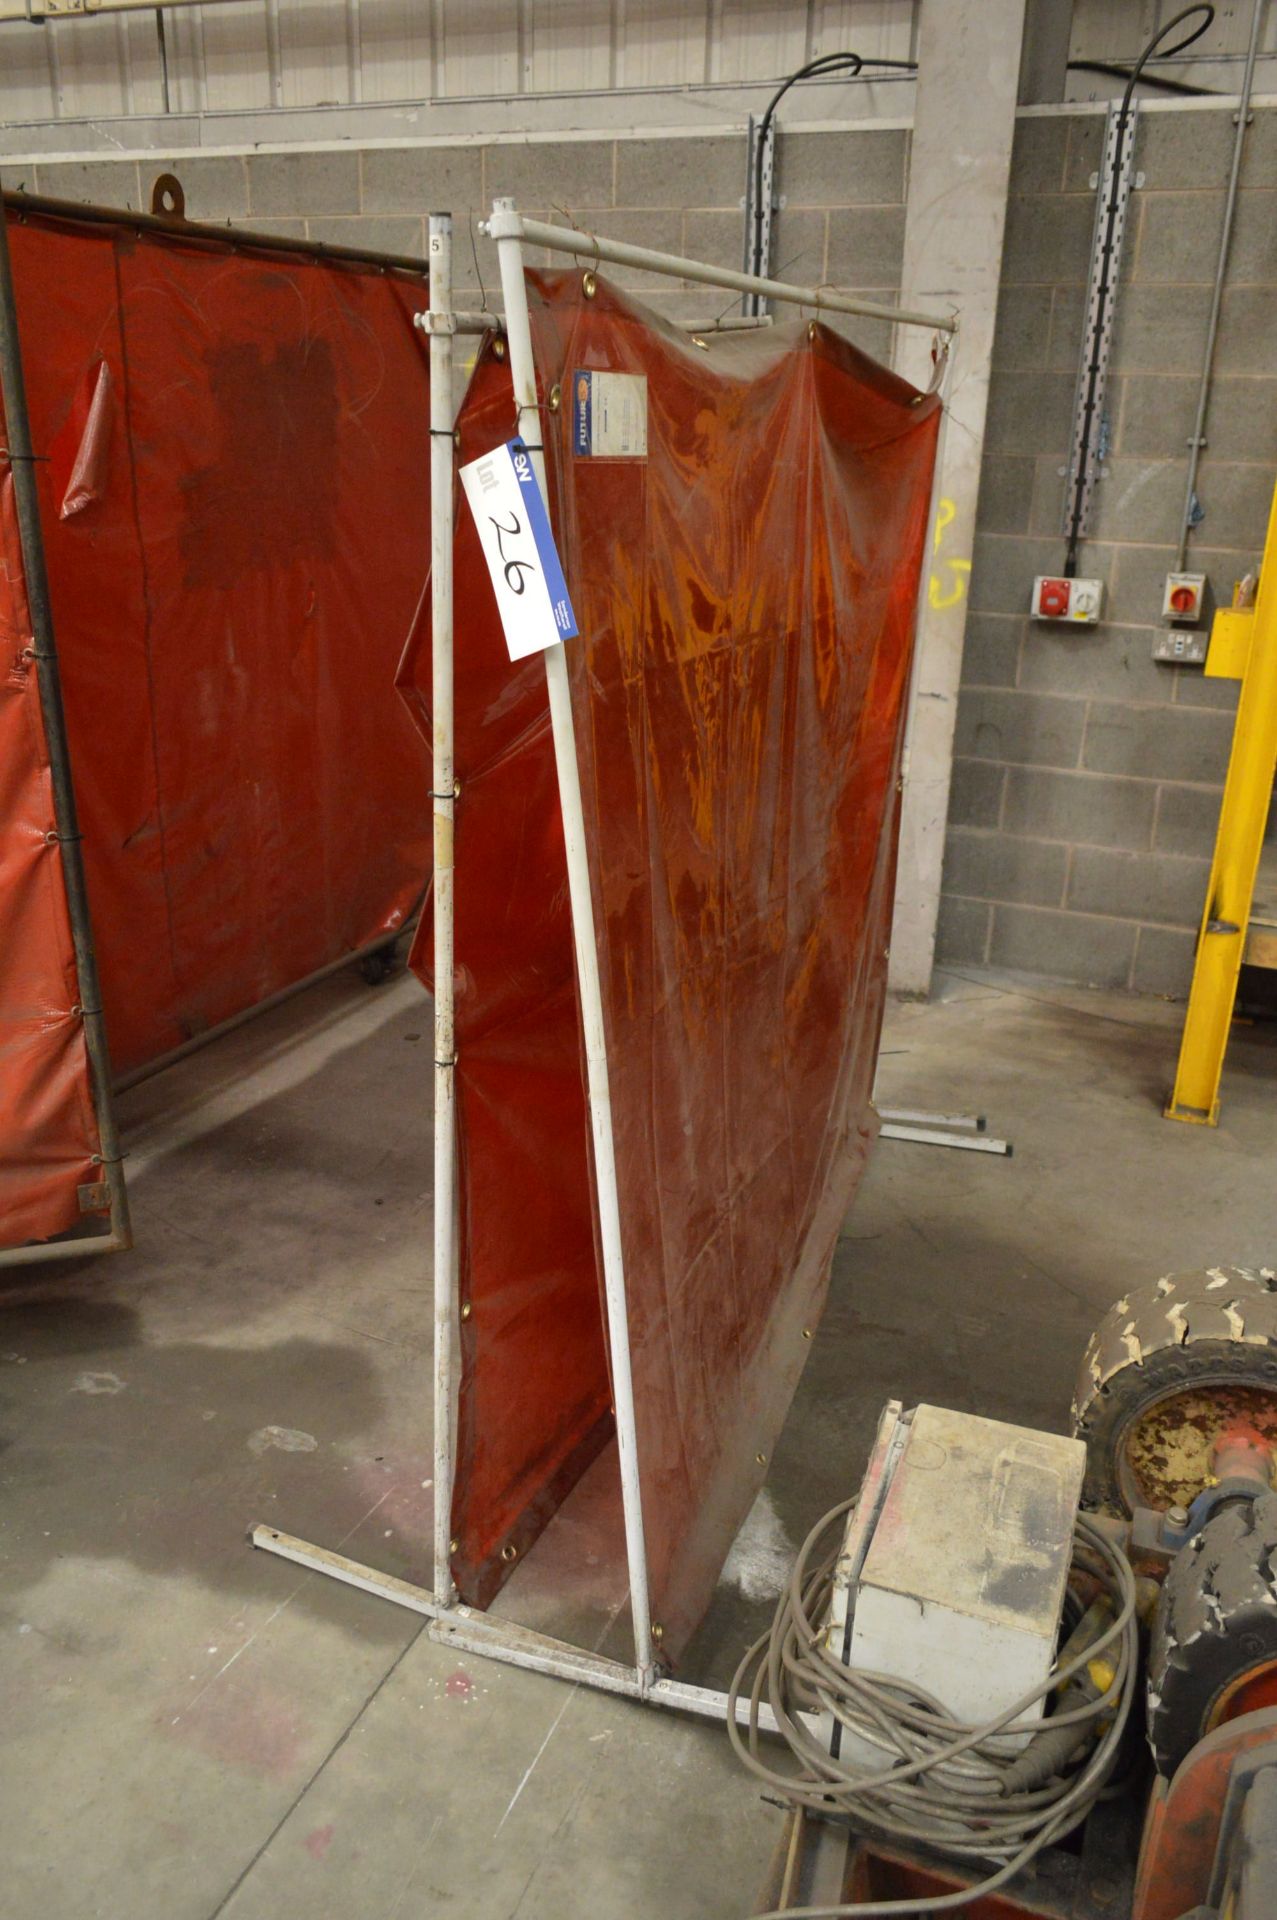 Two Tubular Steel Framed Welding Screens, each approx. 1.85m x 1.8m high